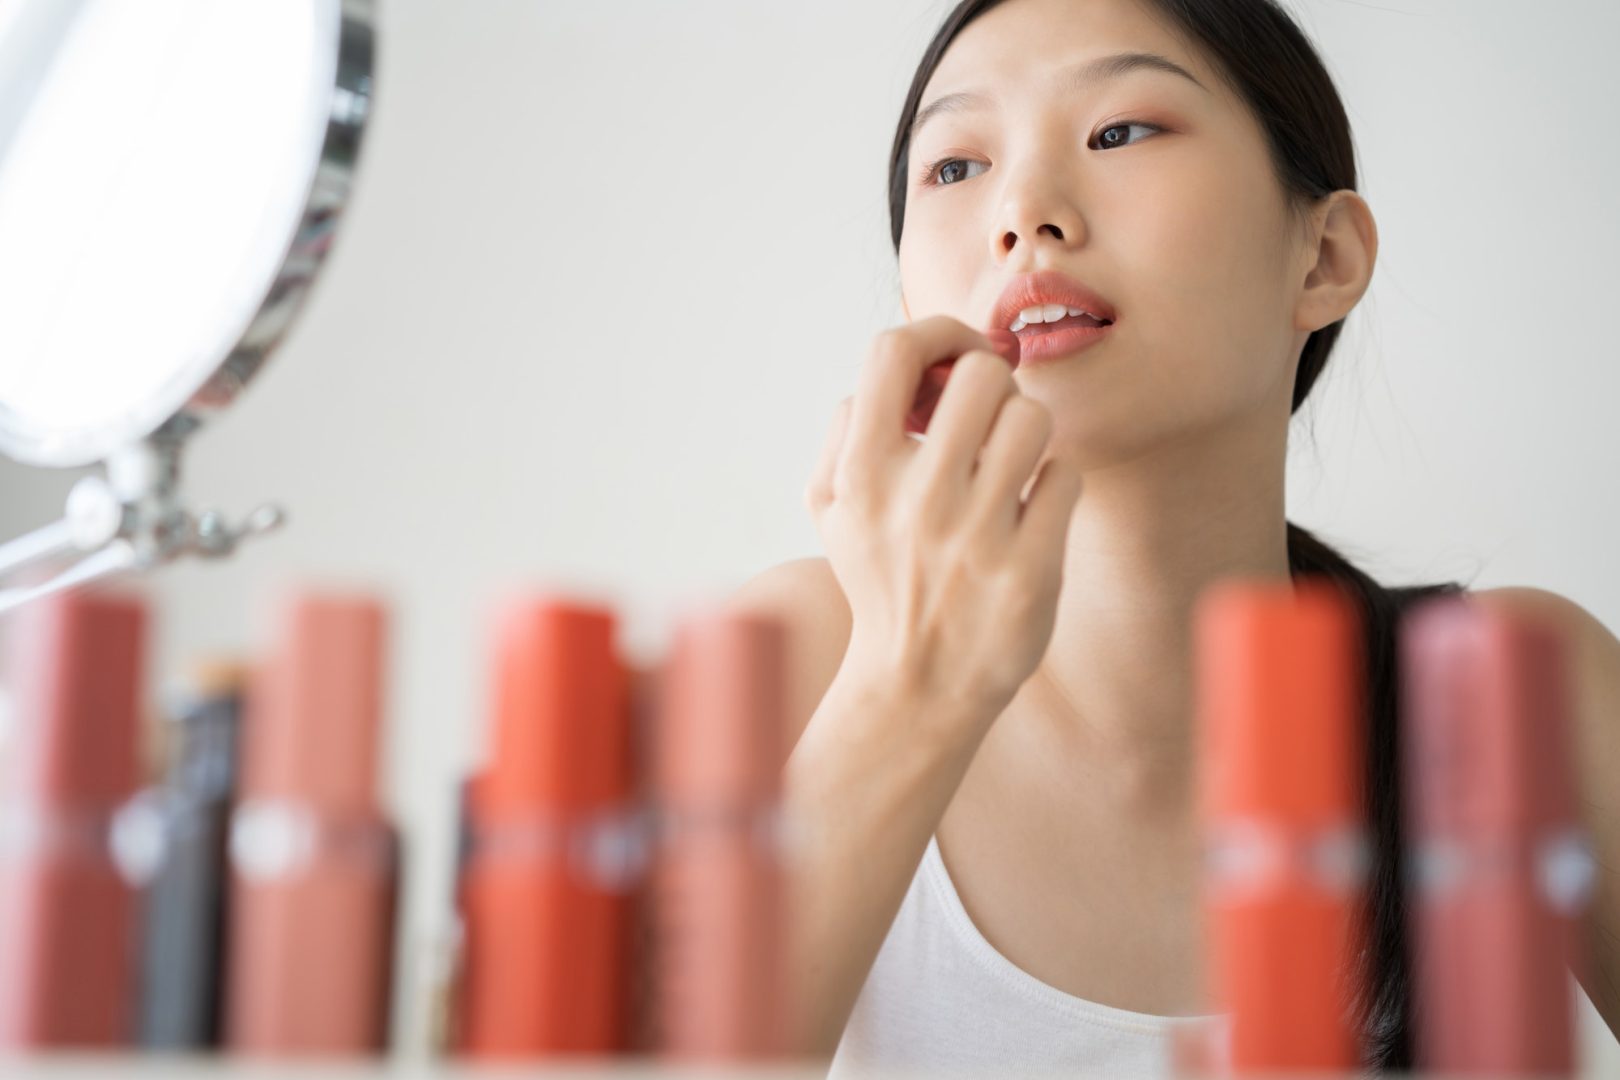 Asian female makeup beauty by lipstick.